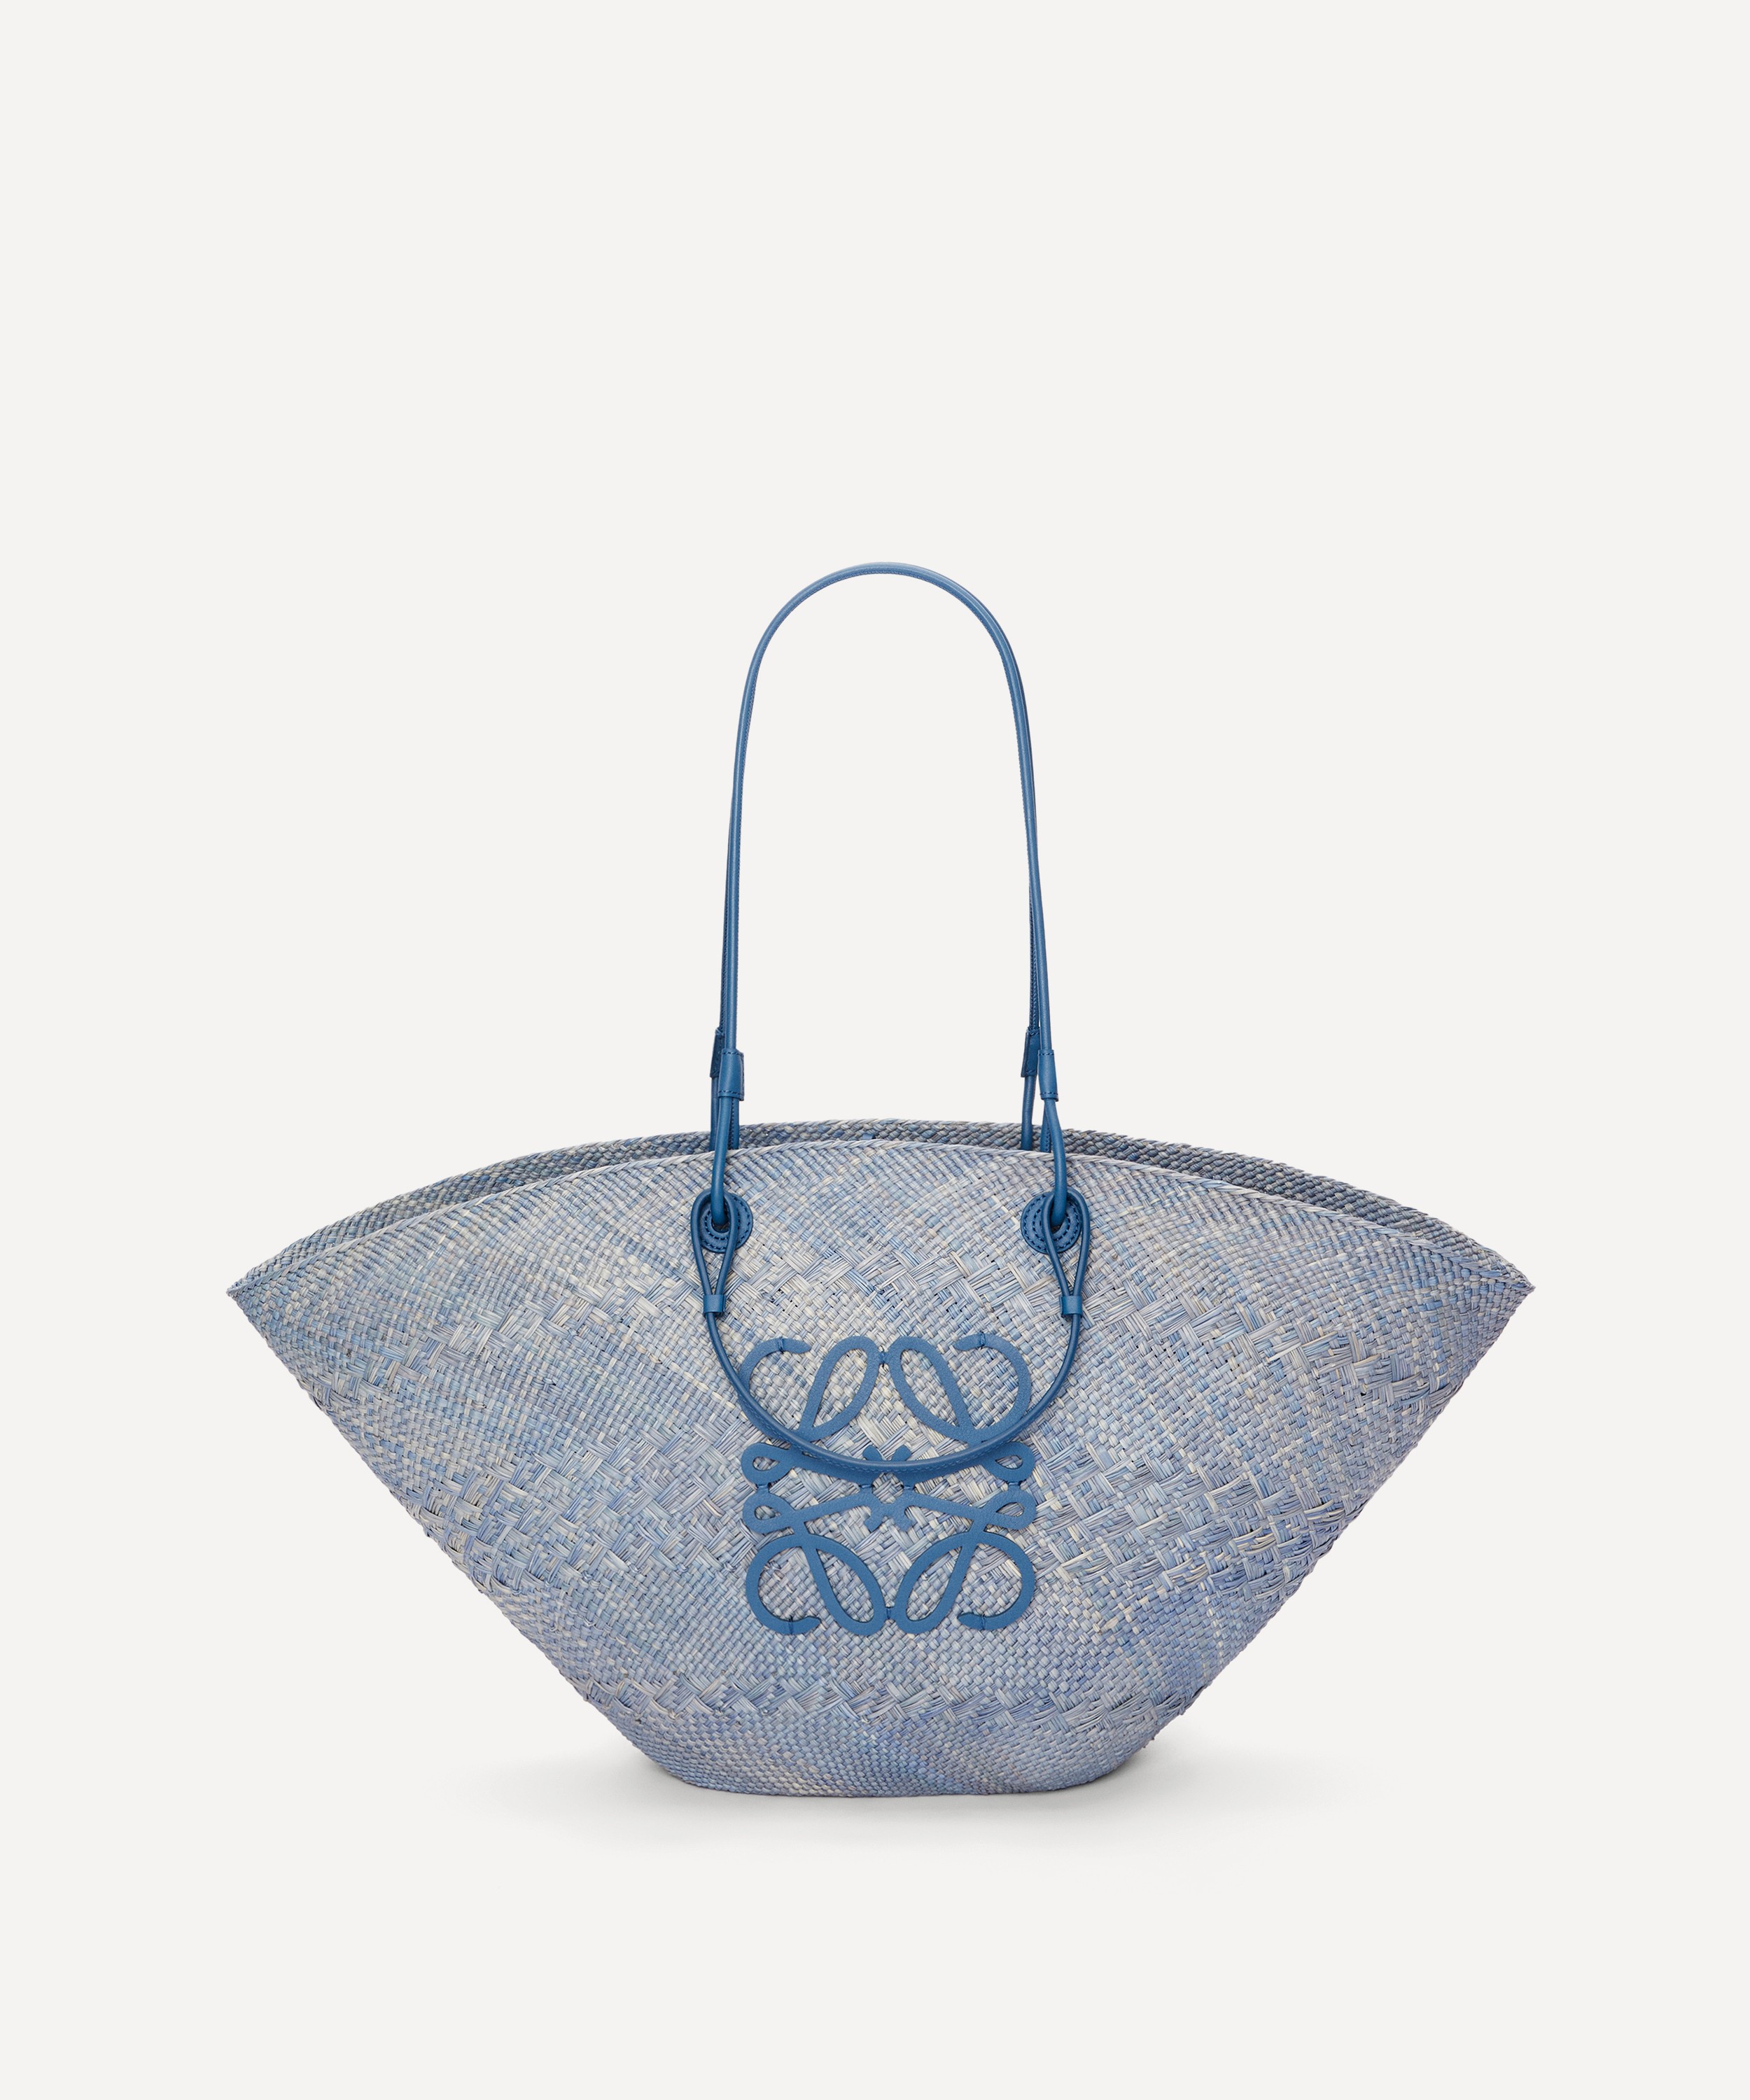 Loewe Basket Bag, The Timeless Designer Accessory Everyone Is Wearing